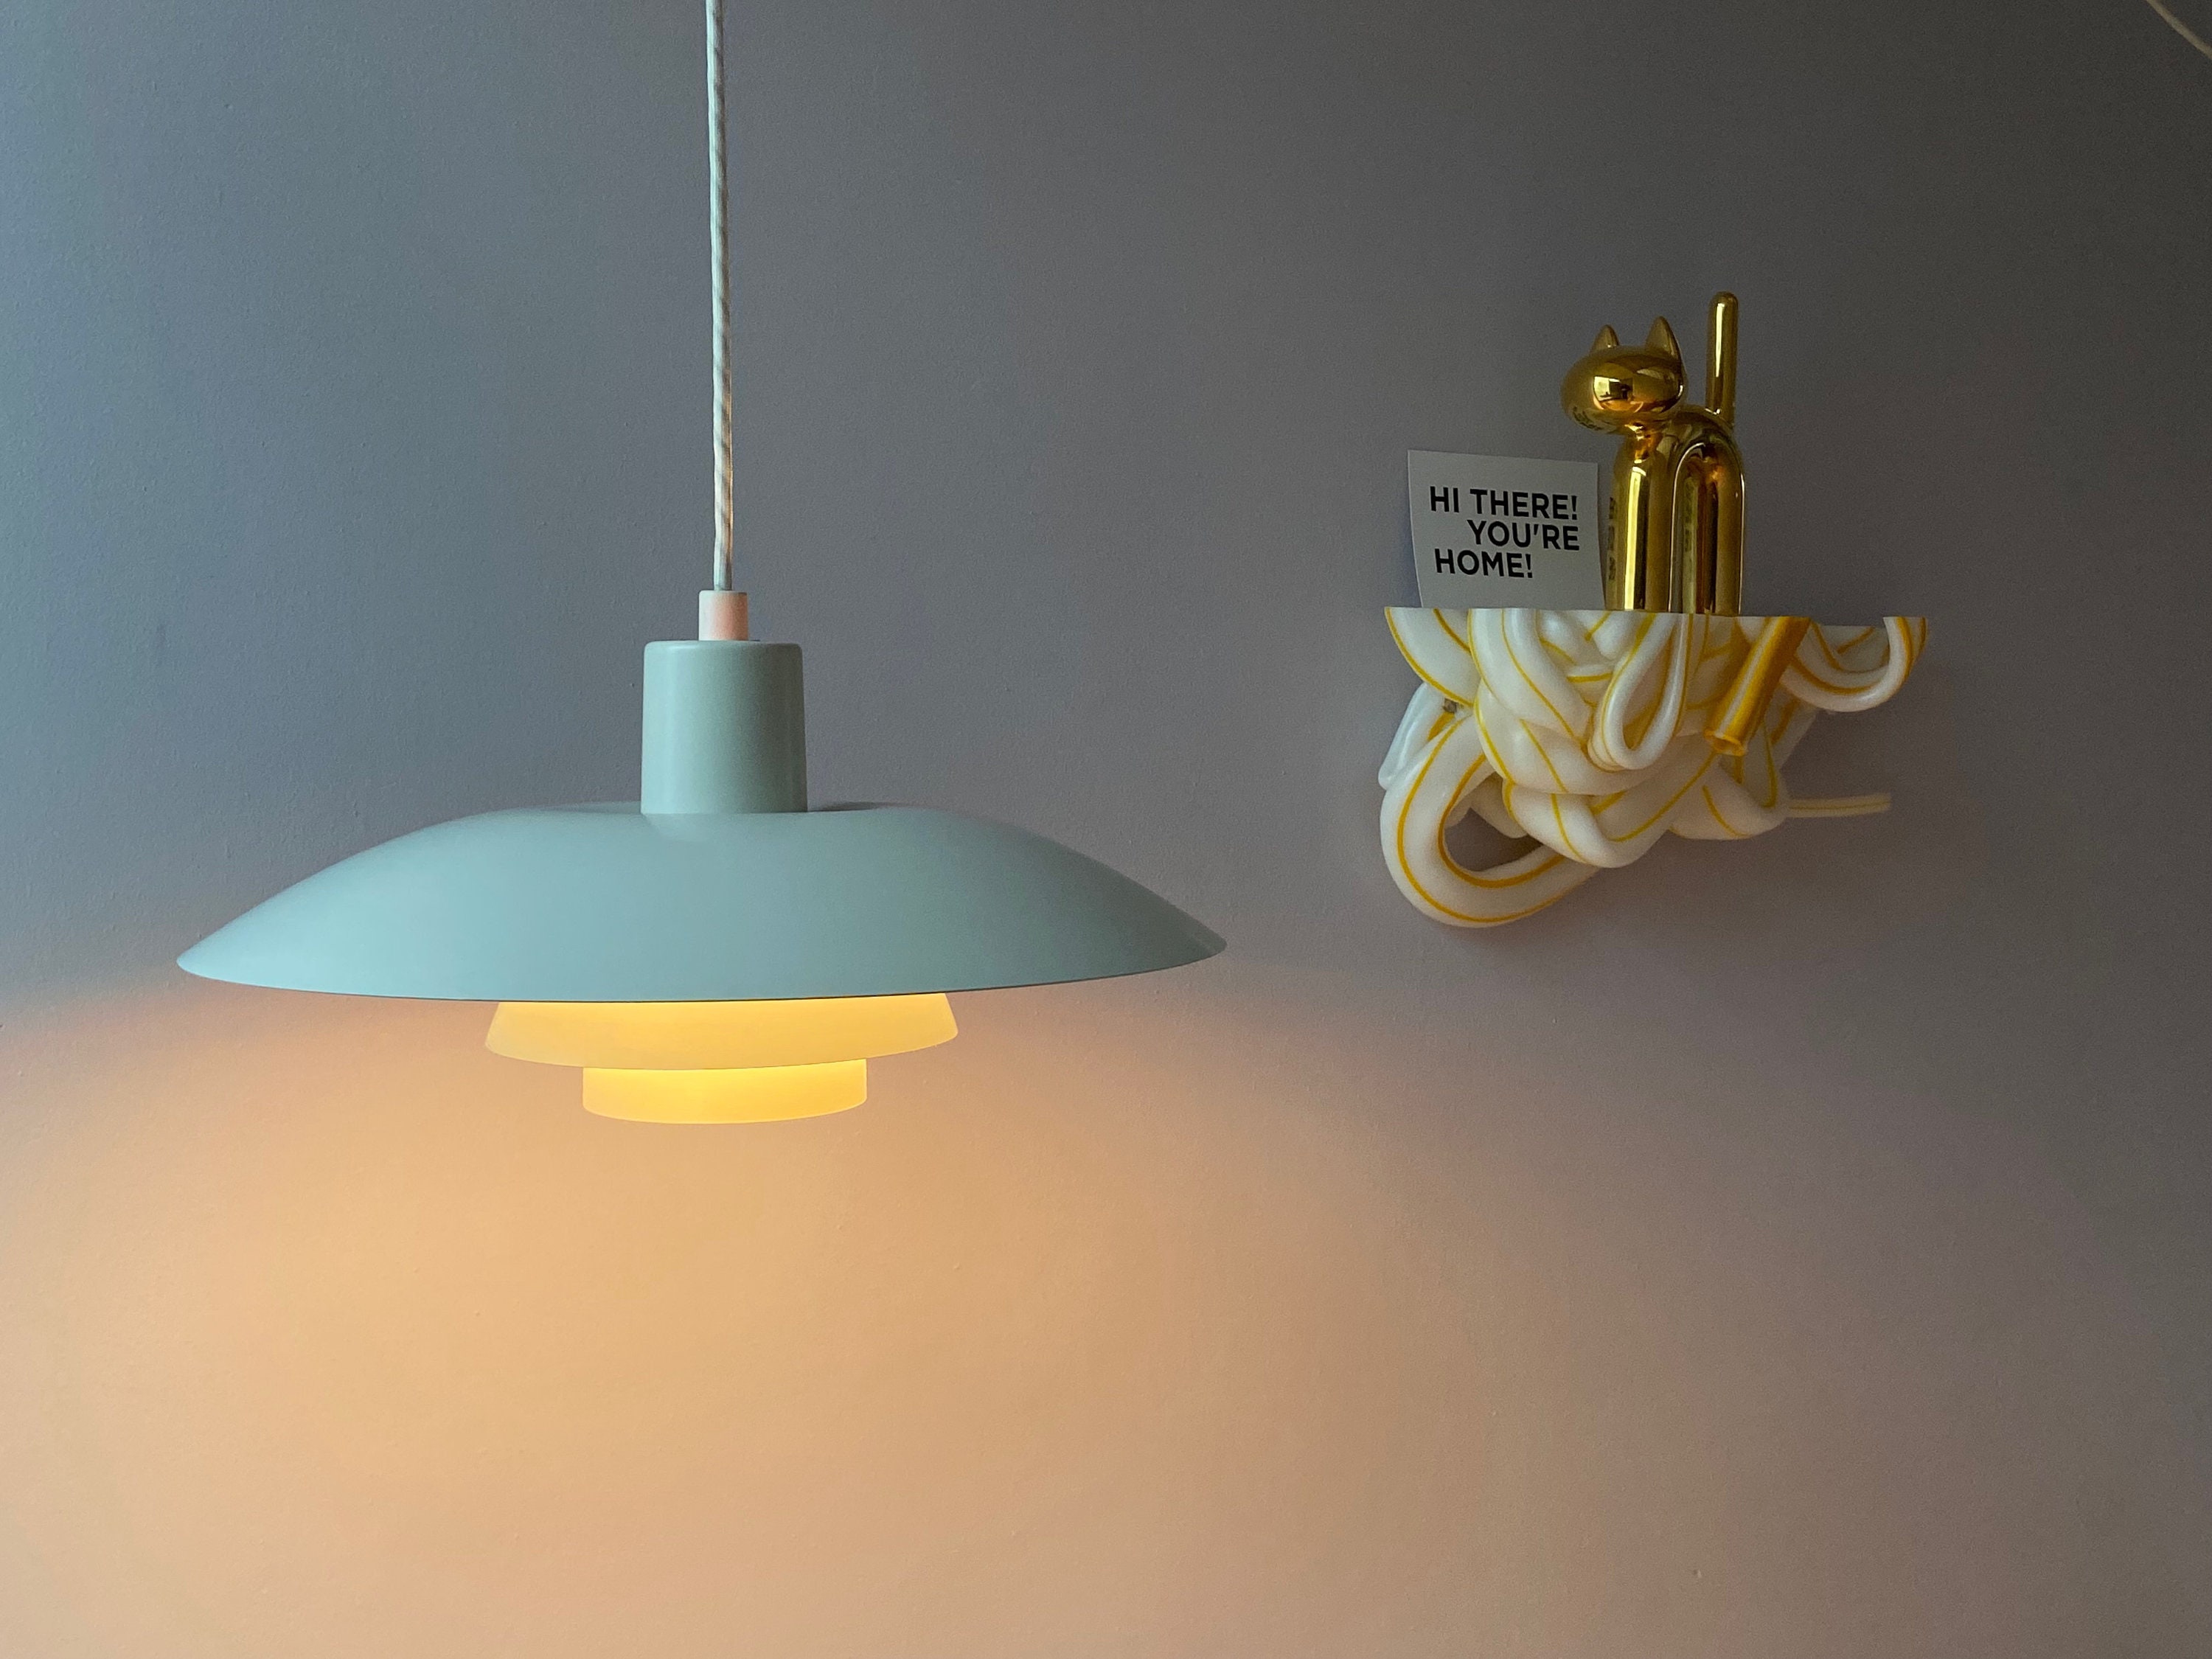 Purchase the PH 4/3 pendant lamp by Louis Poulsen